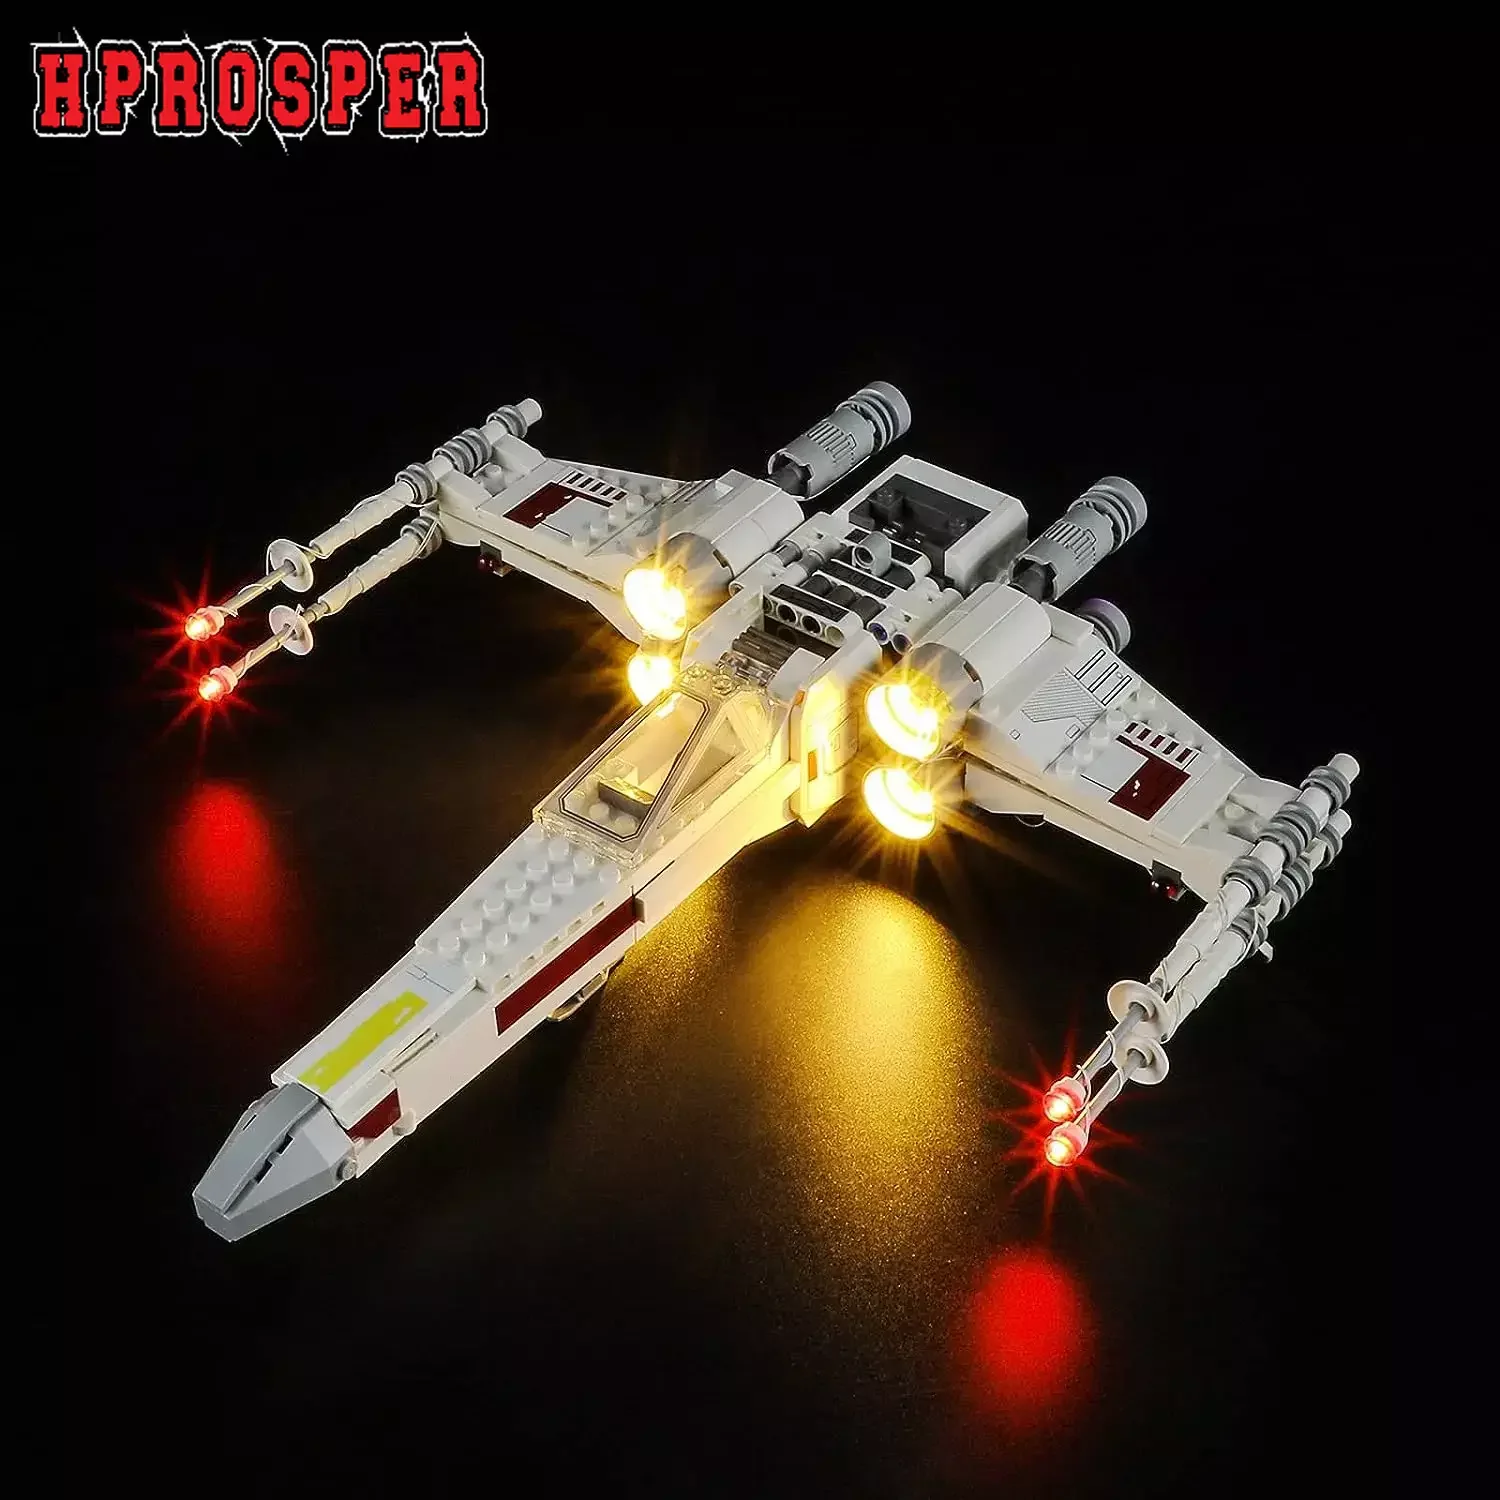 

Hprosper LED Light For 75301 Luke Skywalker’s X-Wing Fighter Decorative Lamp With Battery Box (Not Include Lego Building Blocks)